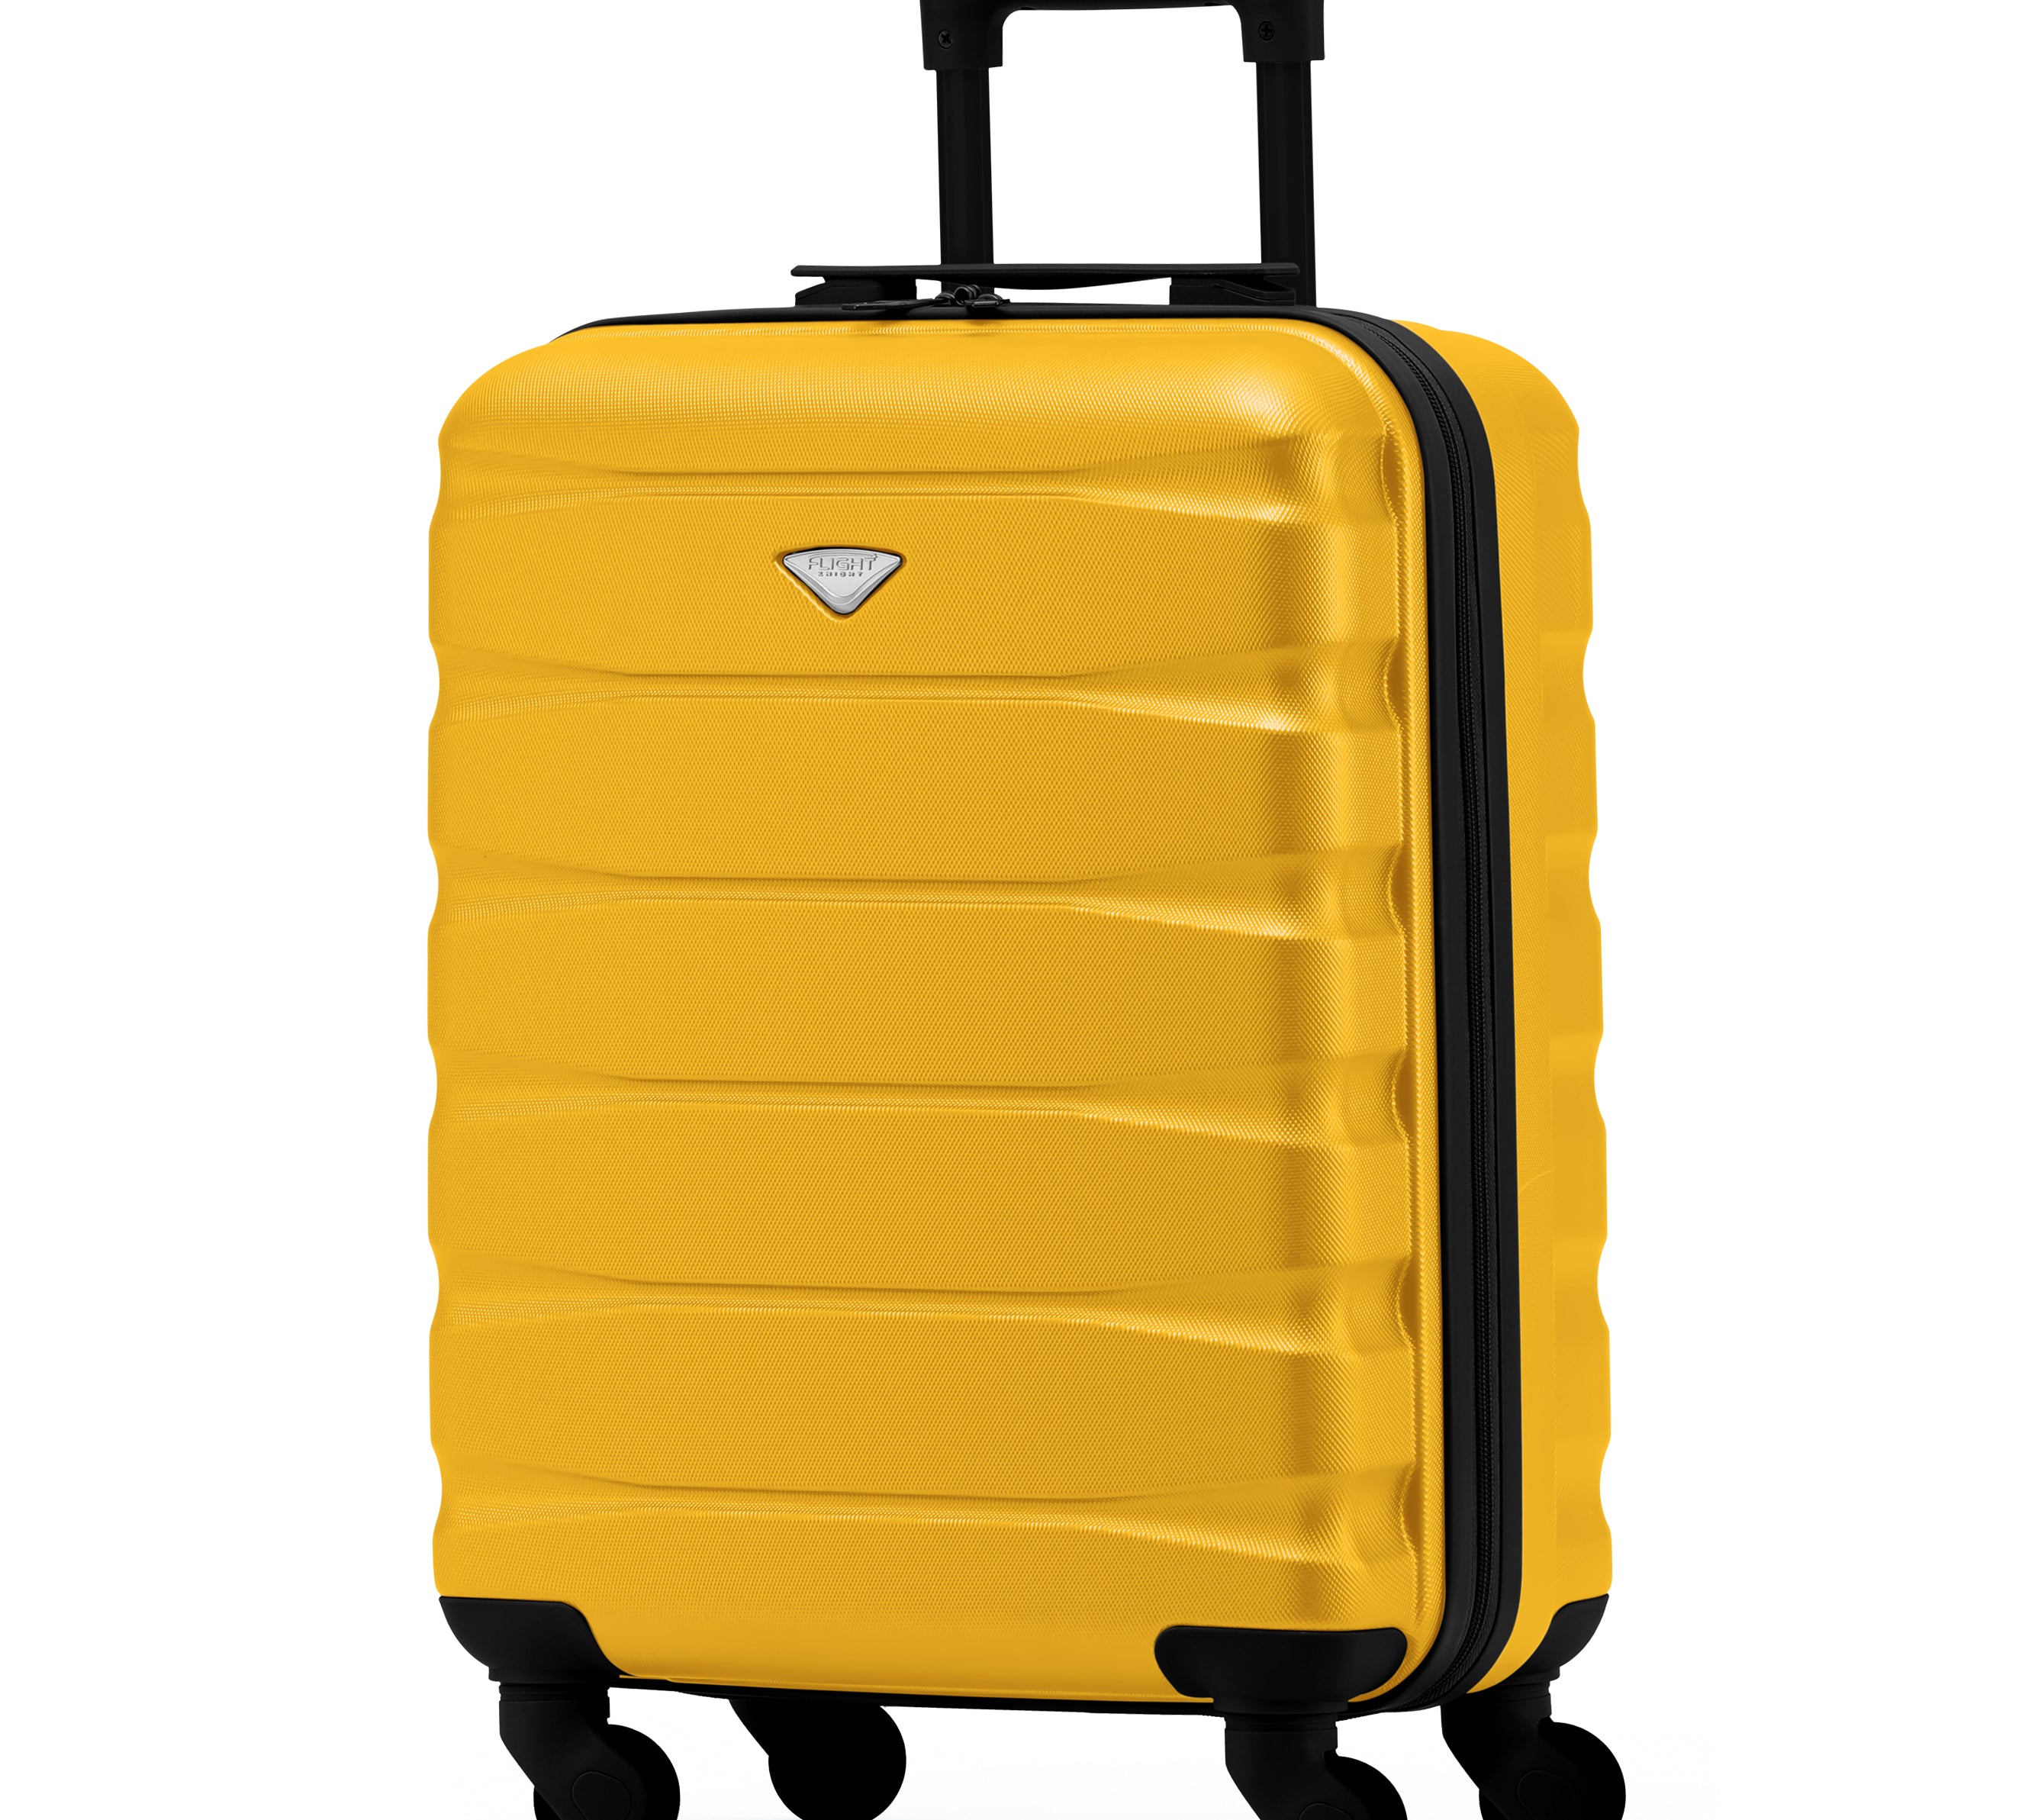 55x40x20cm Maximum Size Ryanair Priority Lightweight 4 Wheel Hard Case Suitcase